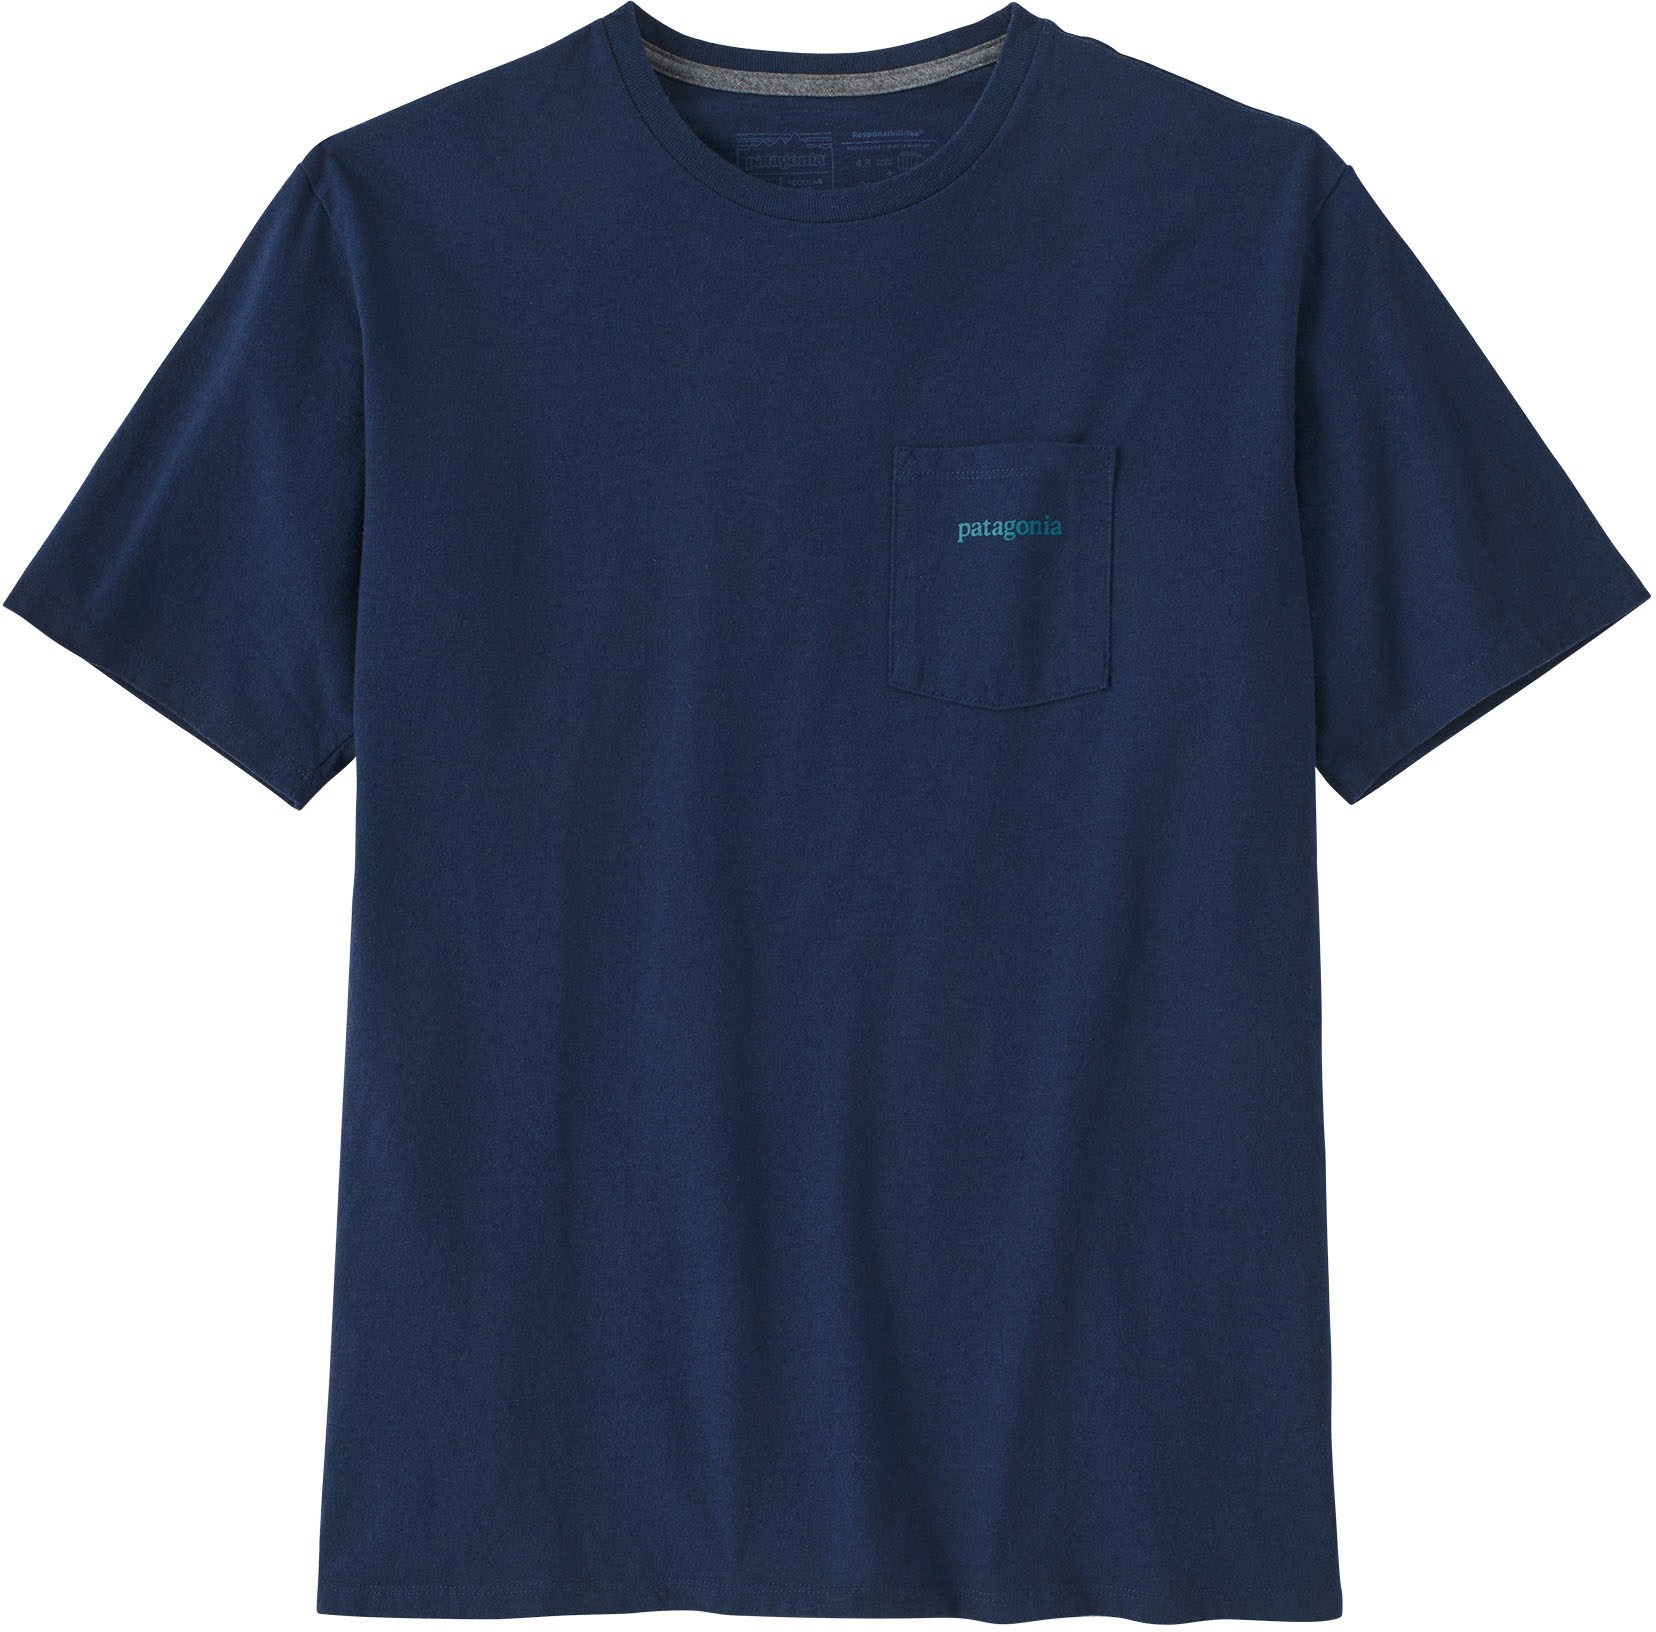 Футболка с логотипом Line Ridge Pocket Responsibili, мужская Patagonia, синий футболка с принтом pocket tee logo dockers цвет bridge smokestack heater